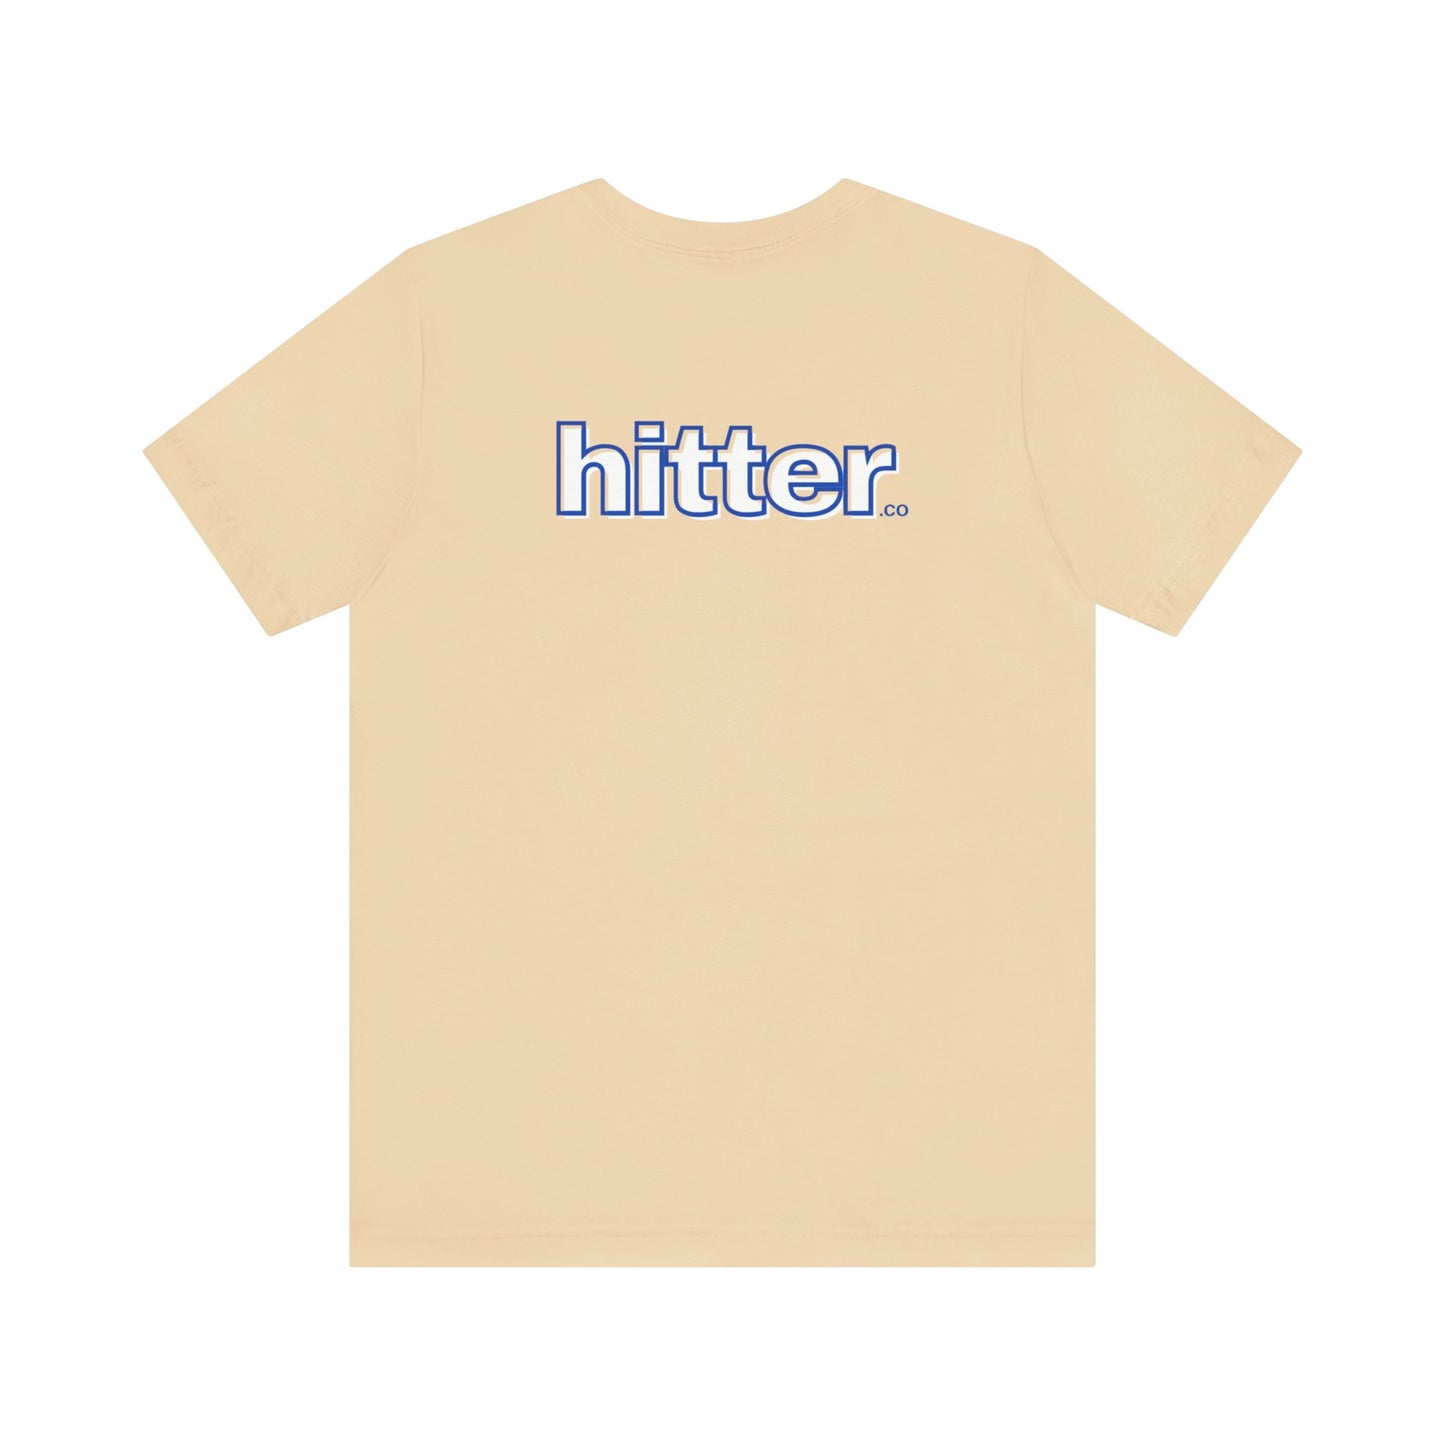 Copy of Hitter